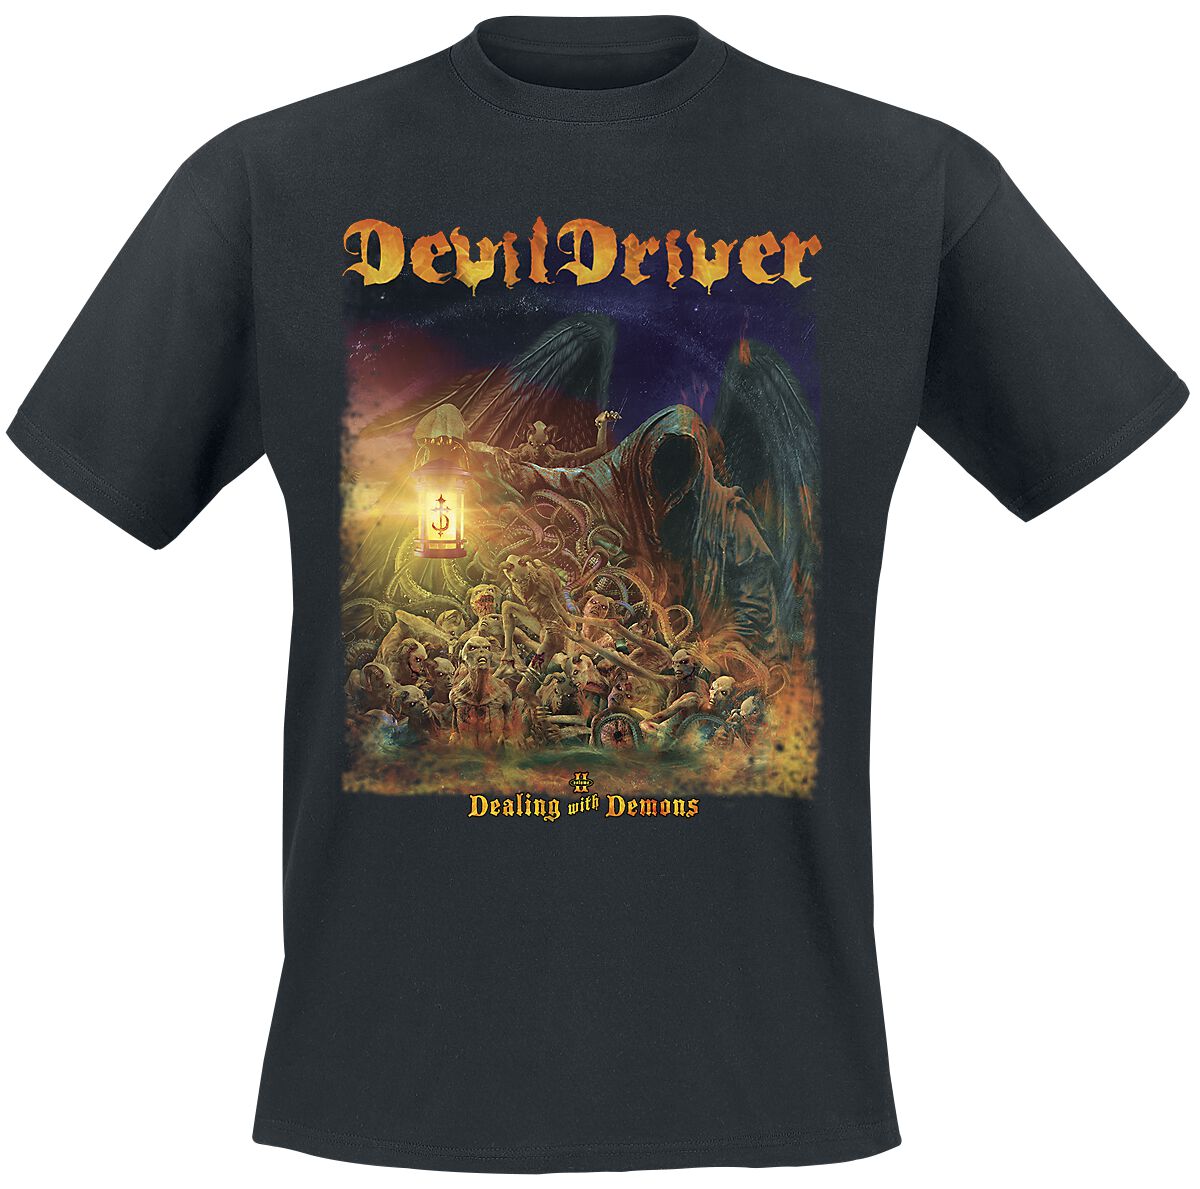 DevilDriver Dealing With Demons II T-Shirt schwarz in M